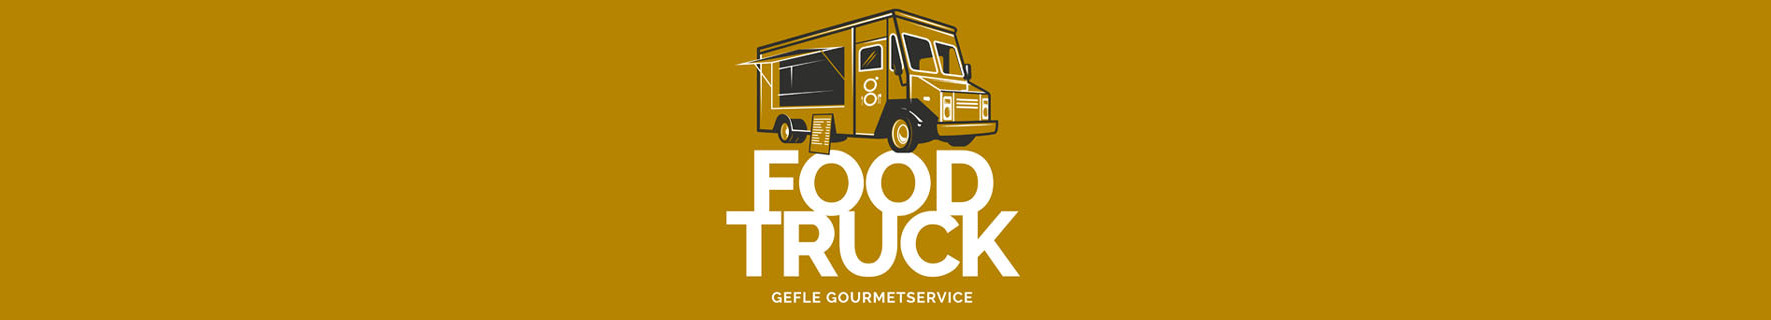 gourmetservice food truck wide